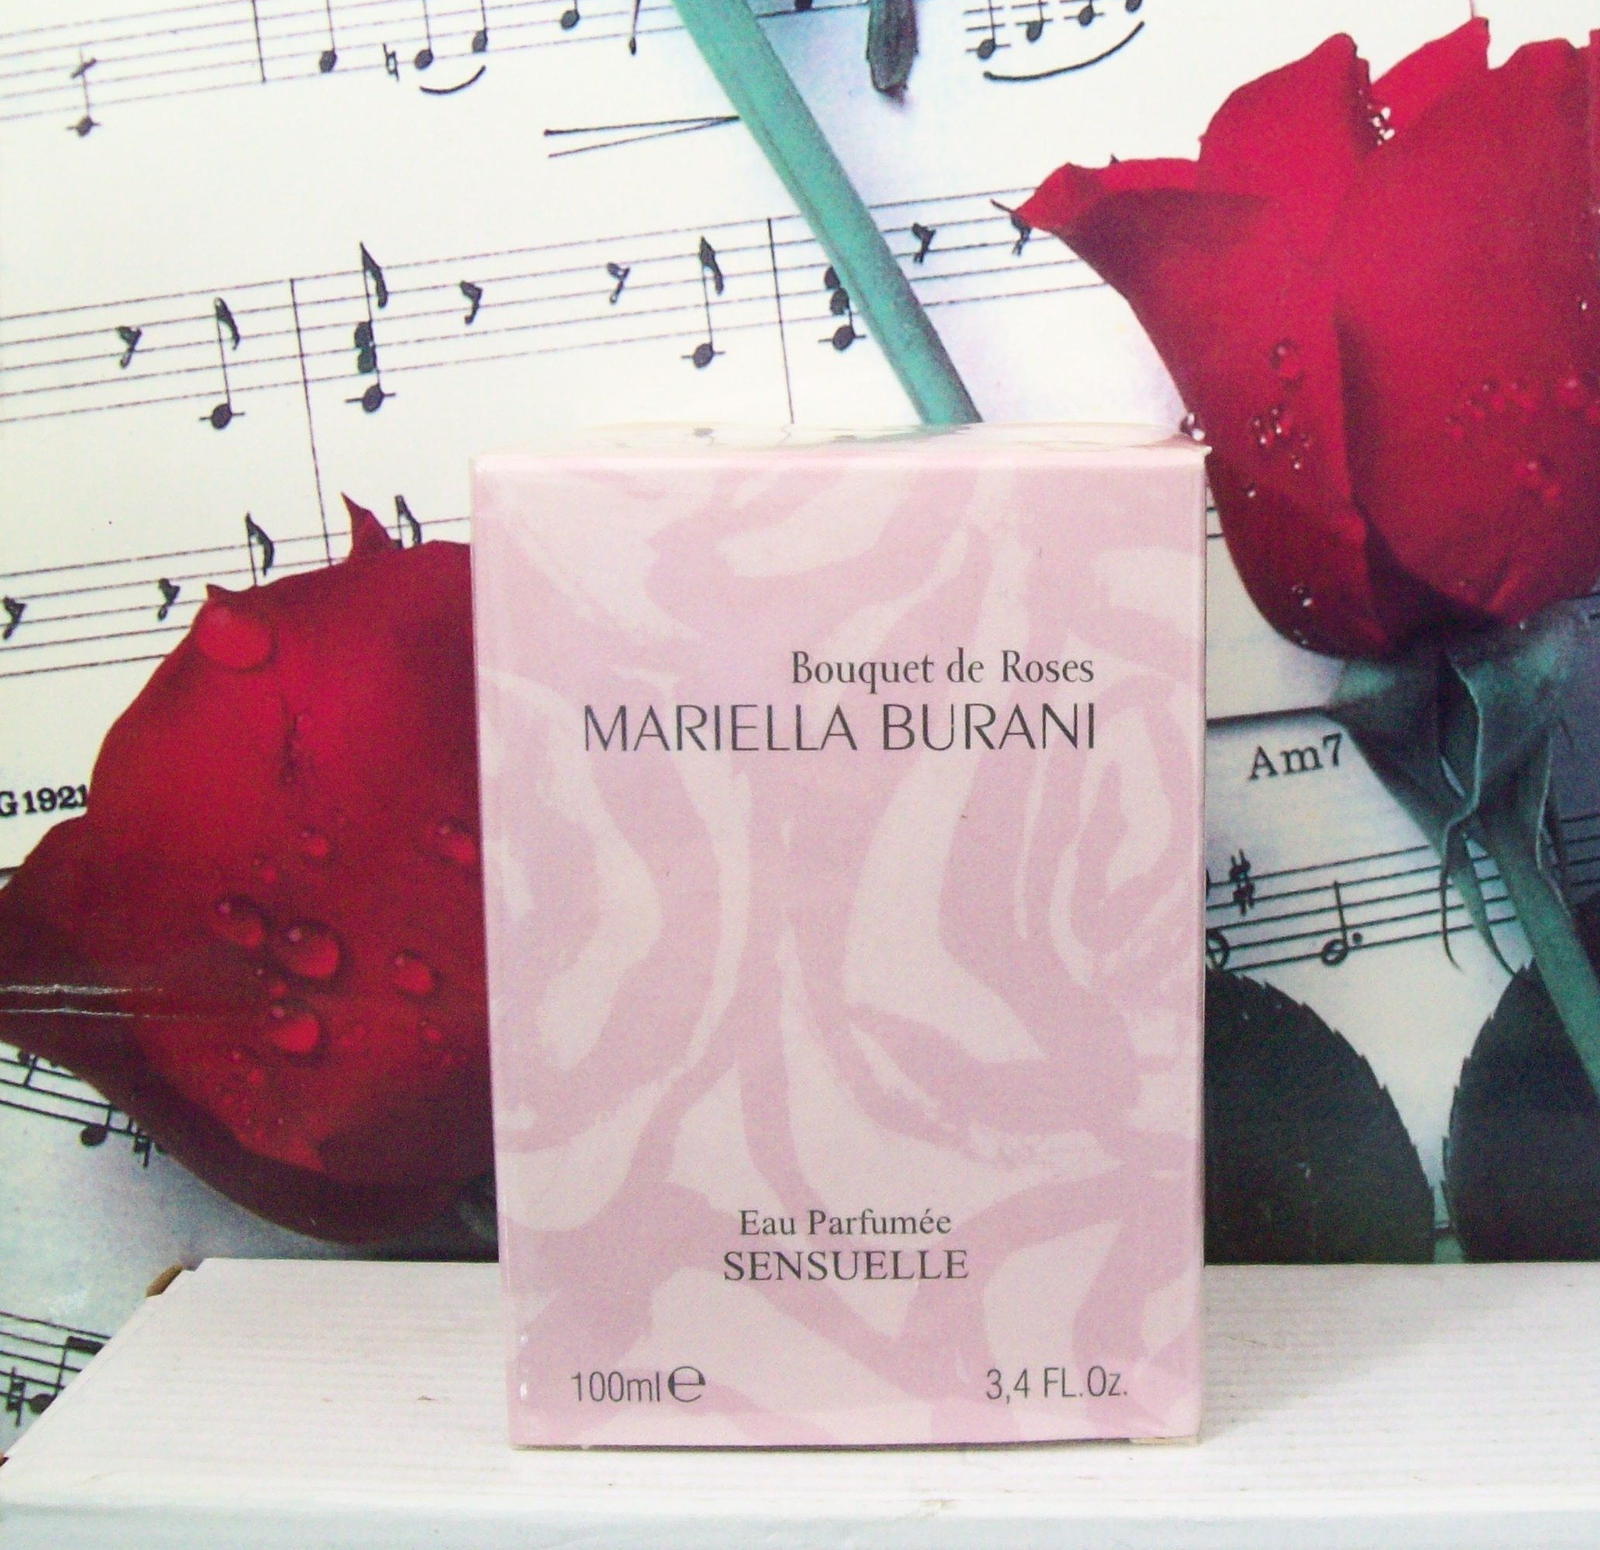 Bouquet De Roses Mariella Burani Eau Parfumee Sensuelle Spray 3.4 FL. OZ. - $119.99